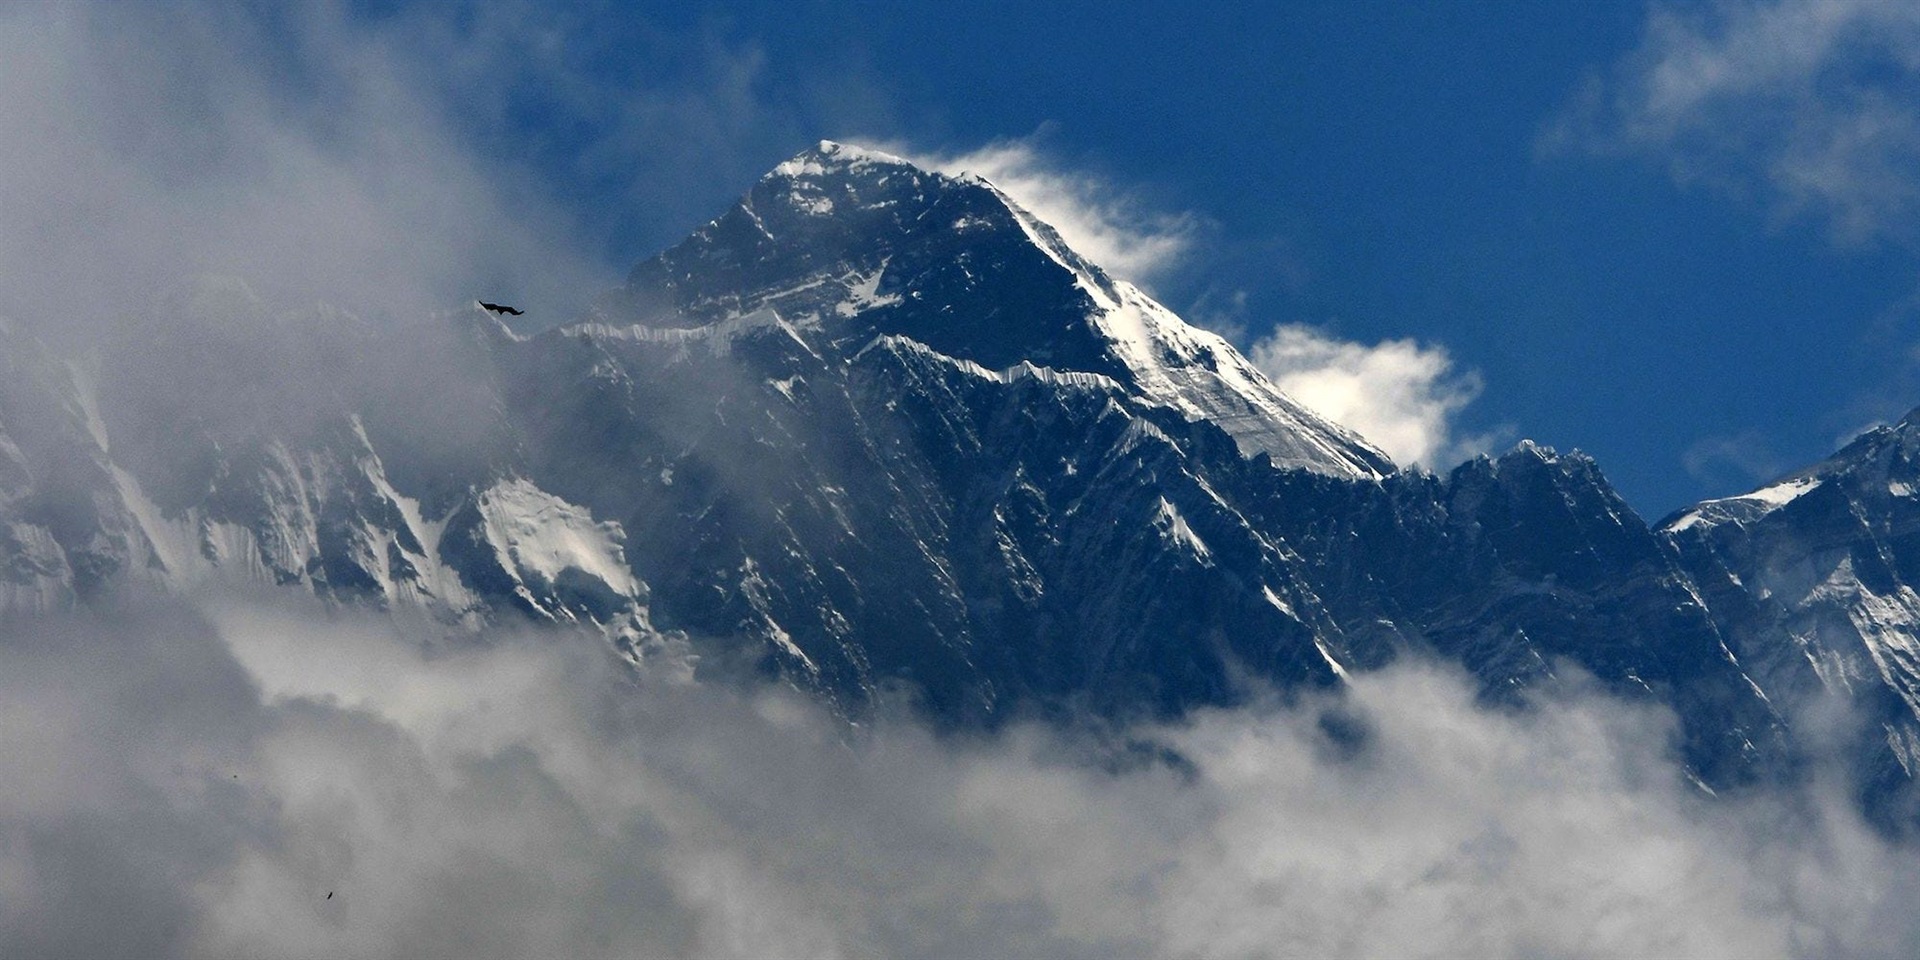 News24.com | Everest's highest glacier rapidly losing ice - study